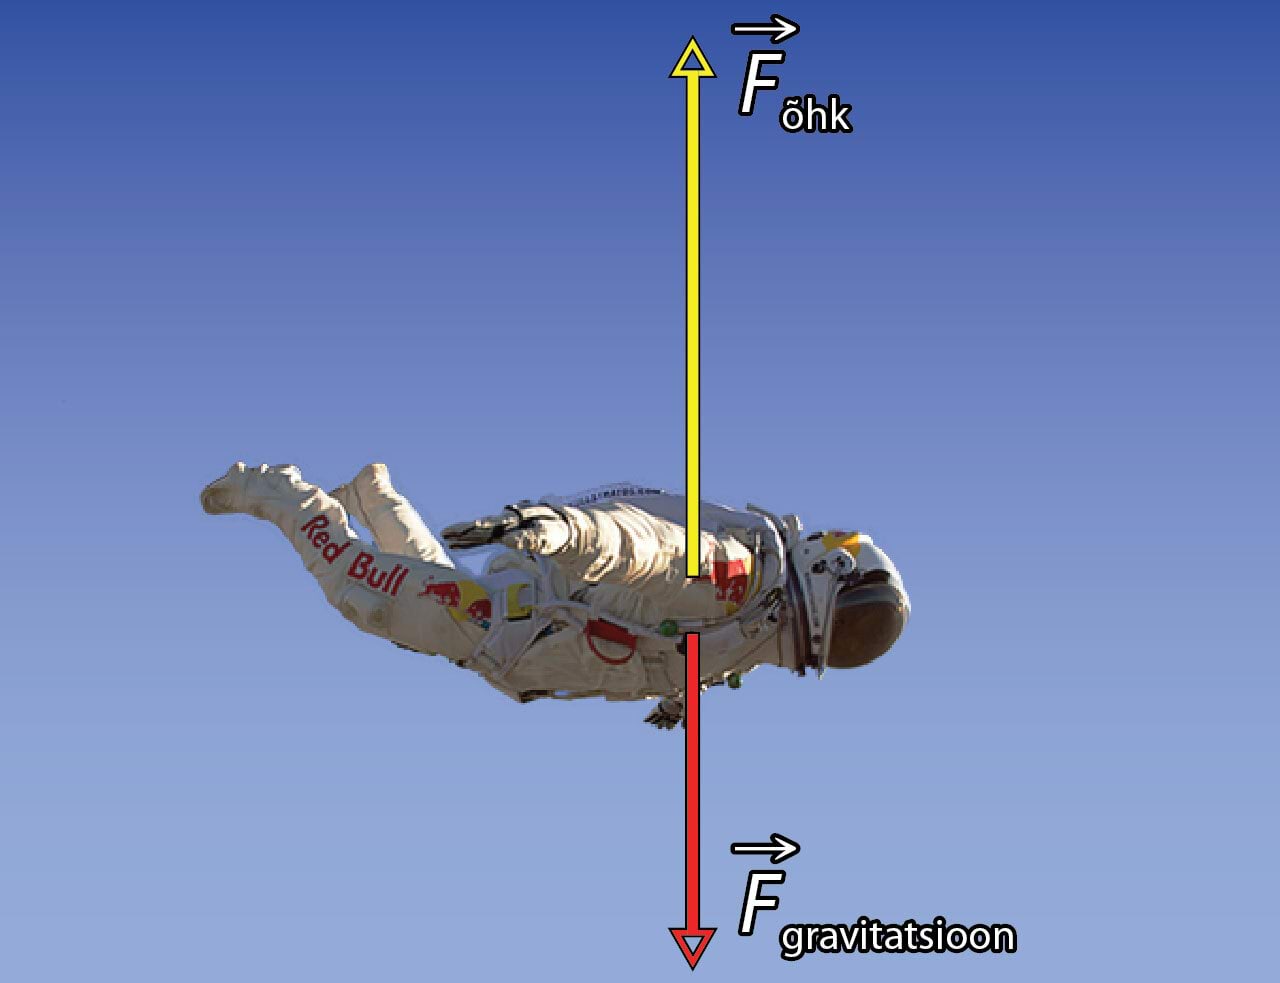 Forces acting on Felix Baumgartner during the deceleration phase of the jump